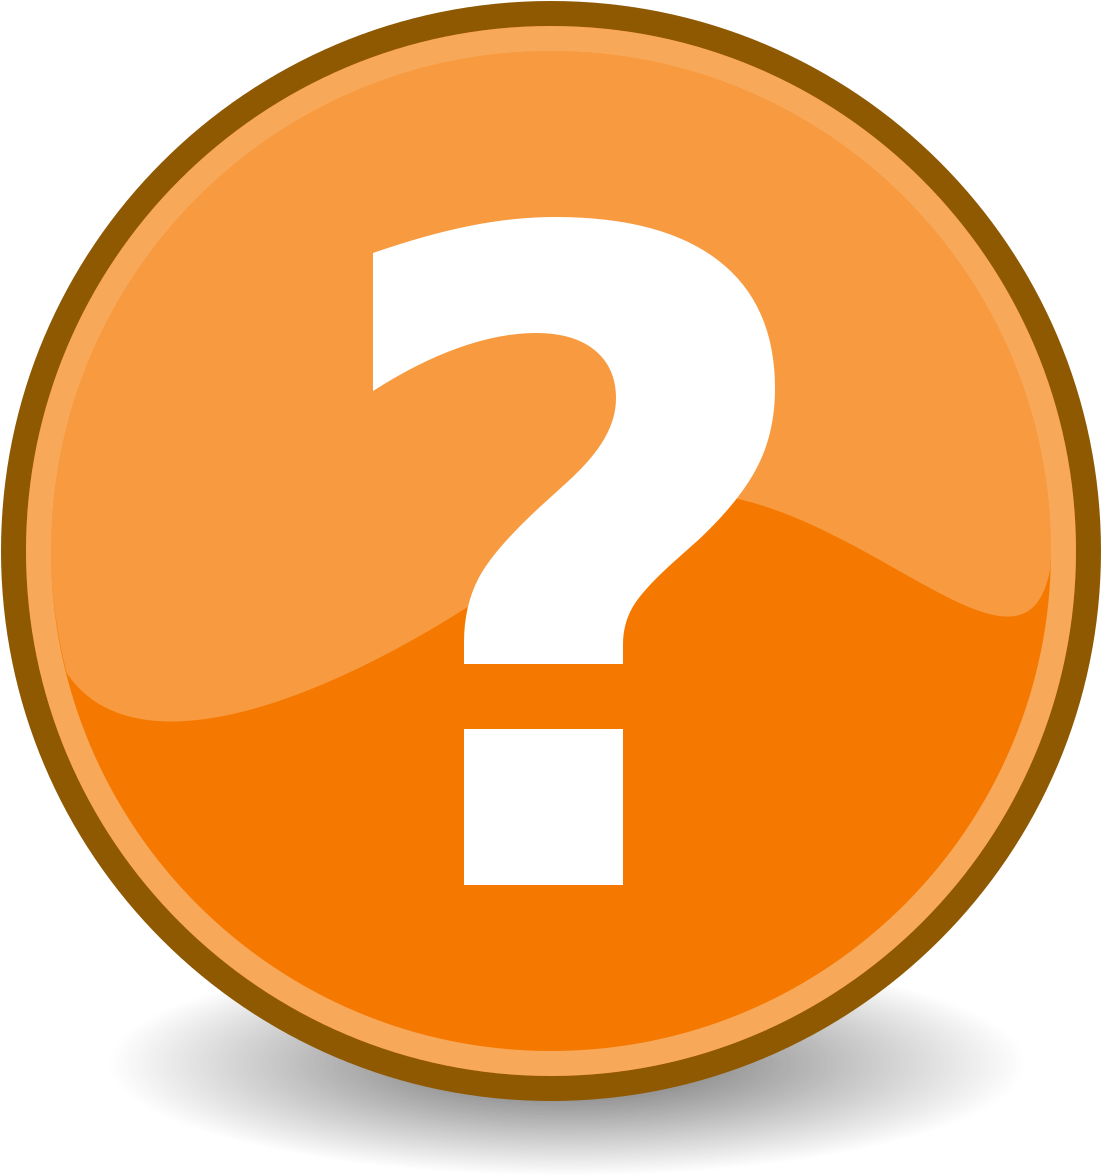 A White Question Mark On An Orange Circle